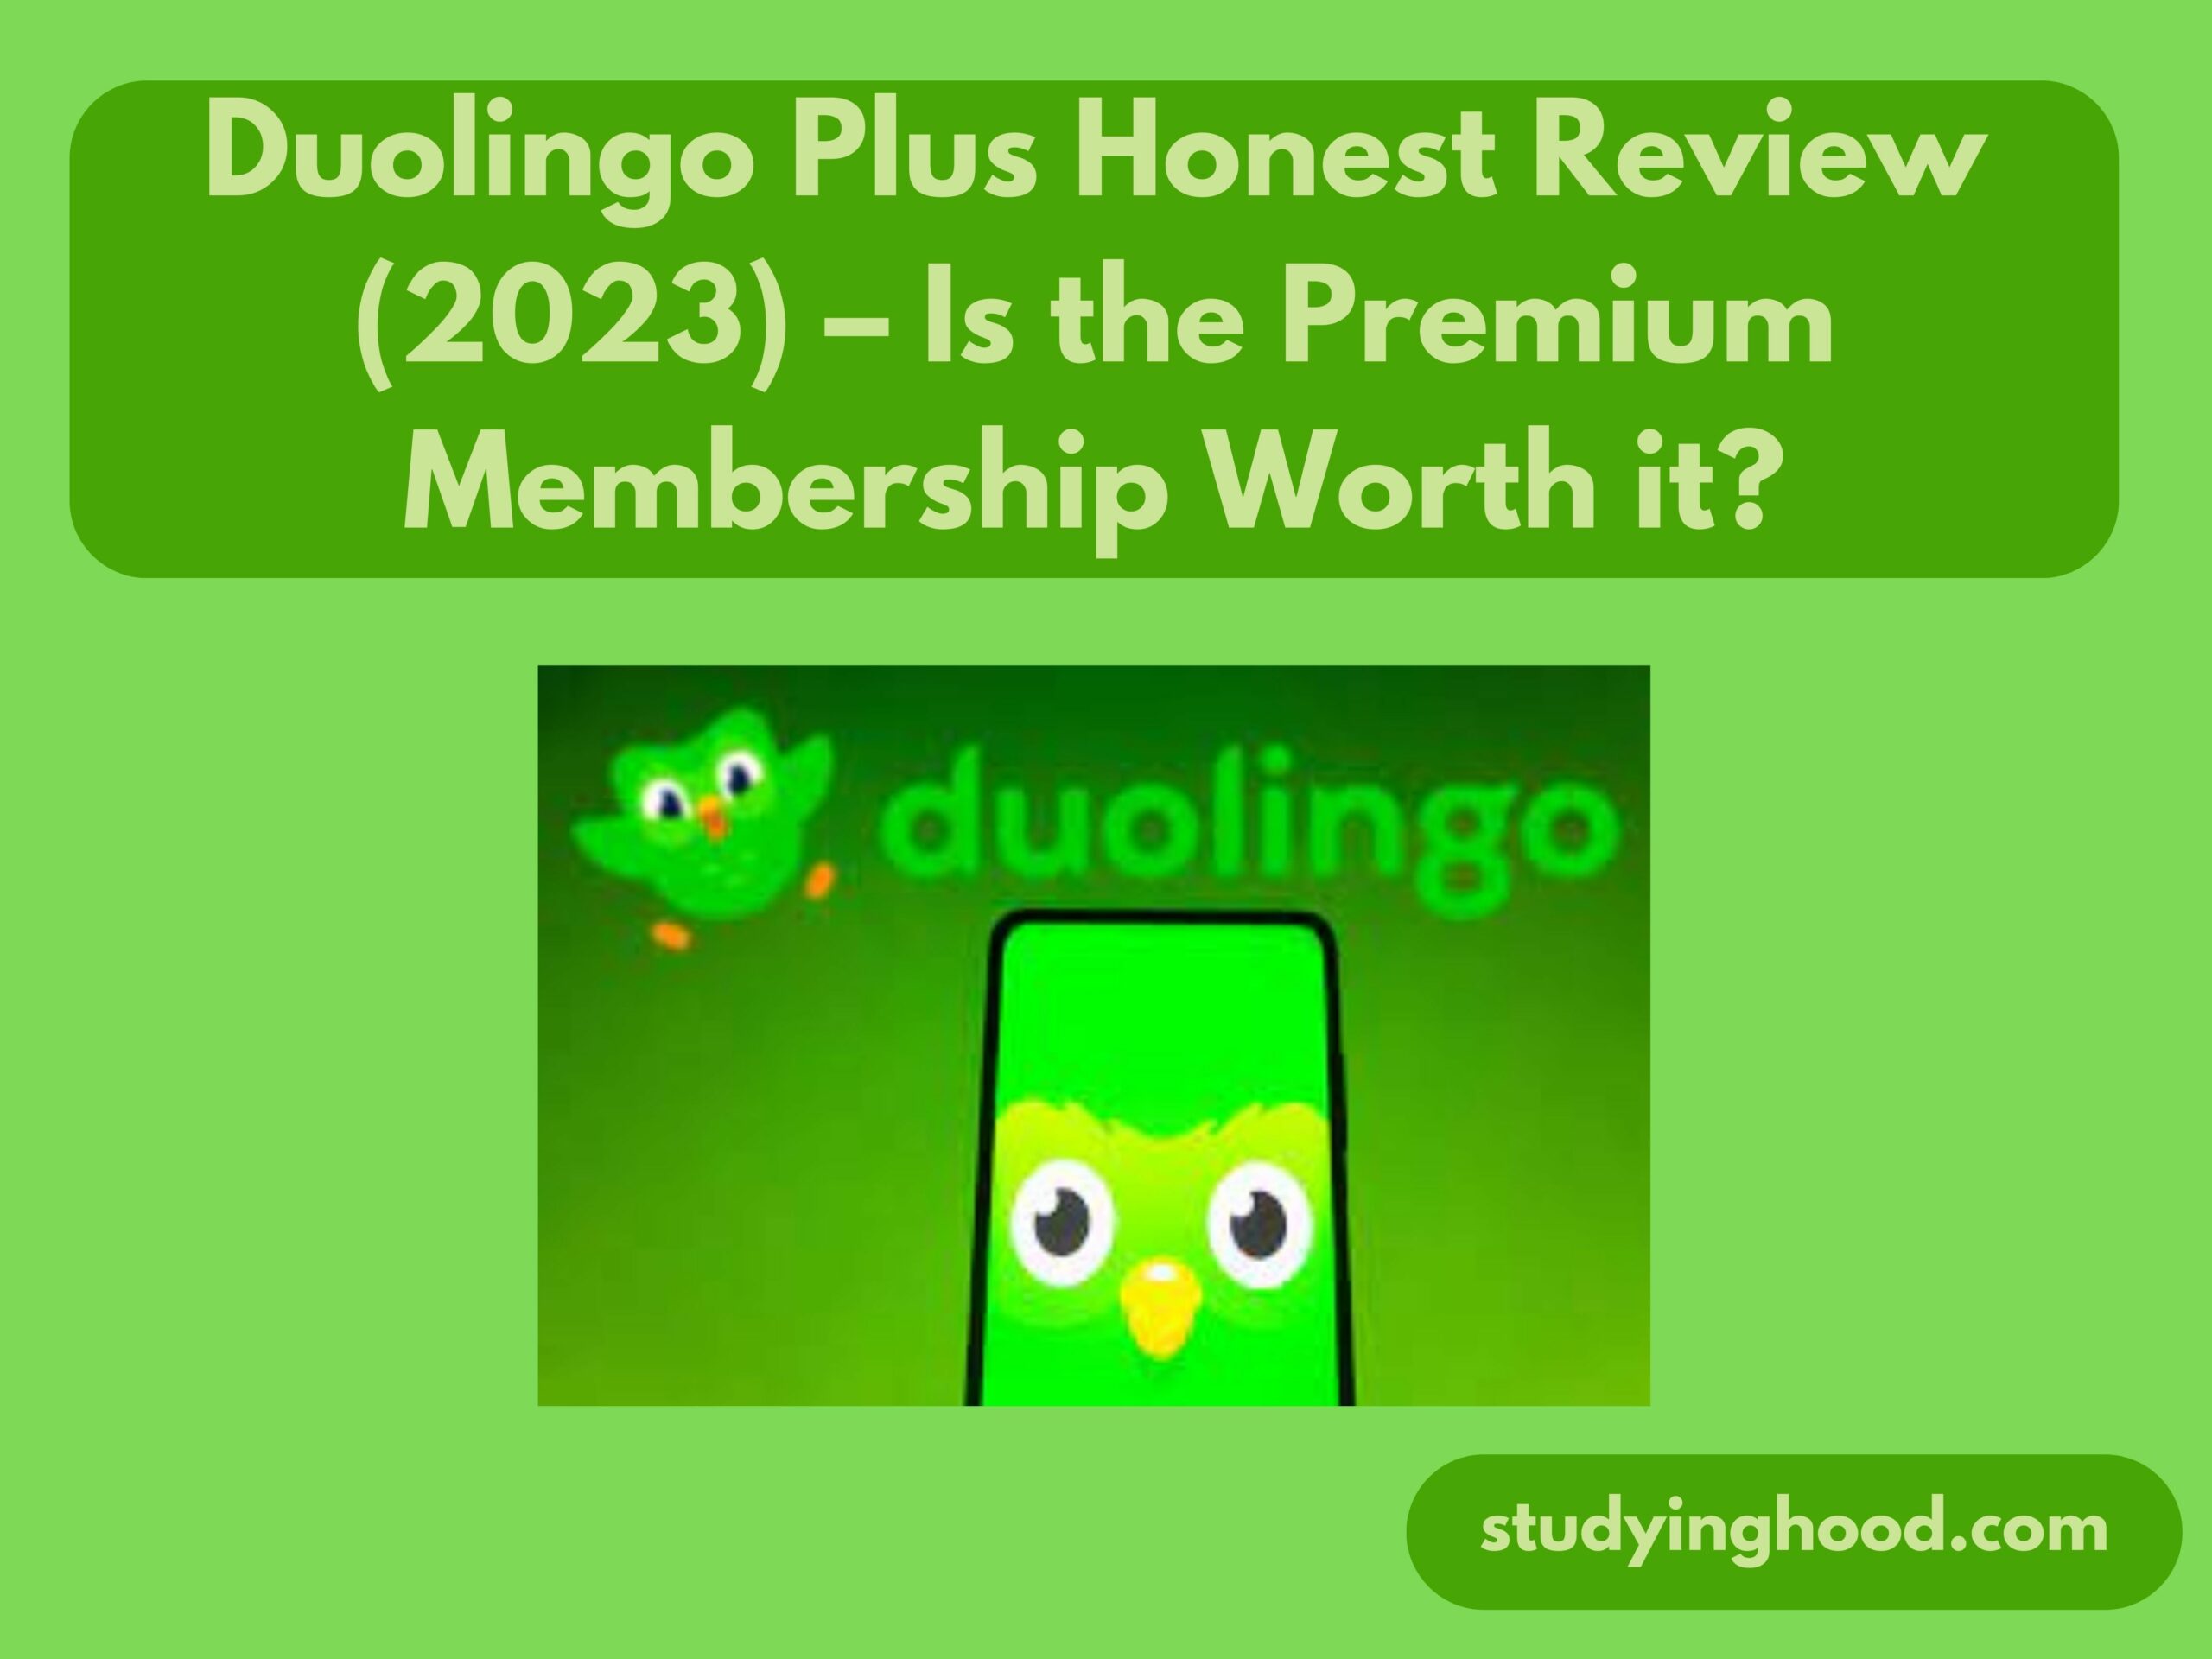 Duolingo Plus Honest Review (2023) – Is the Premium Membership Worth it